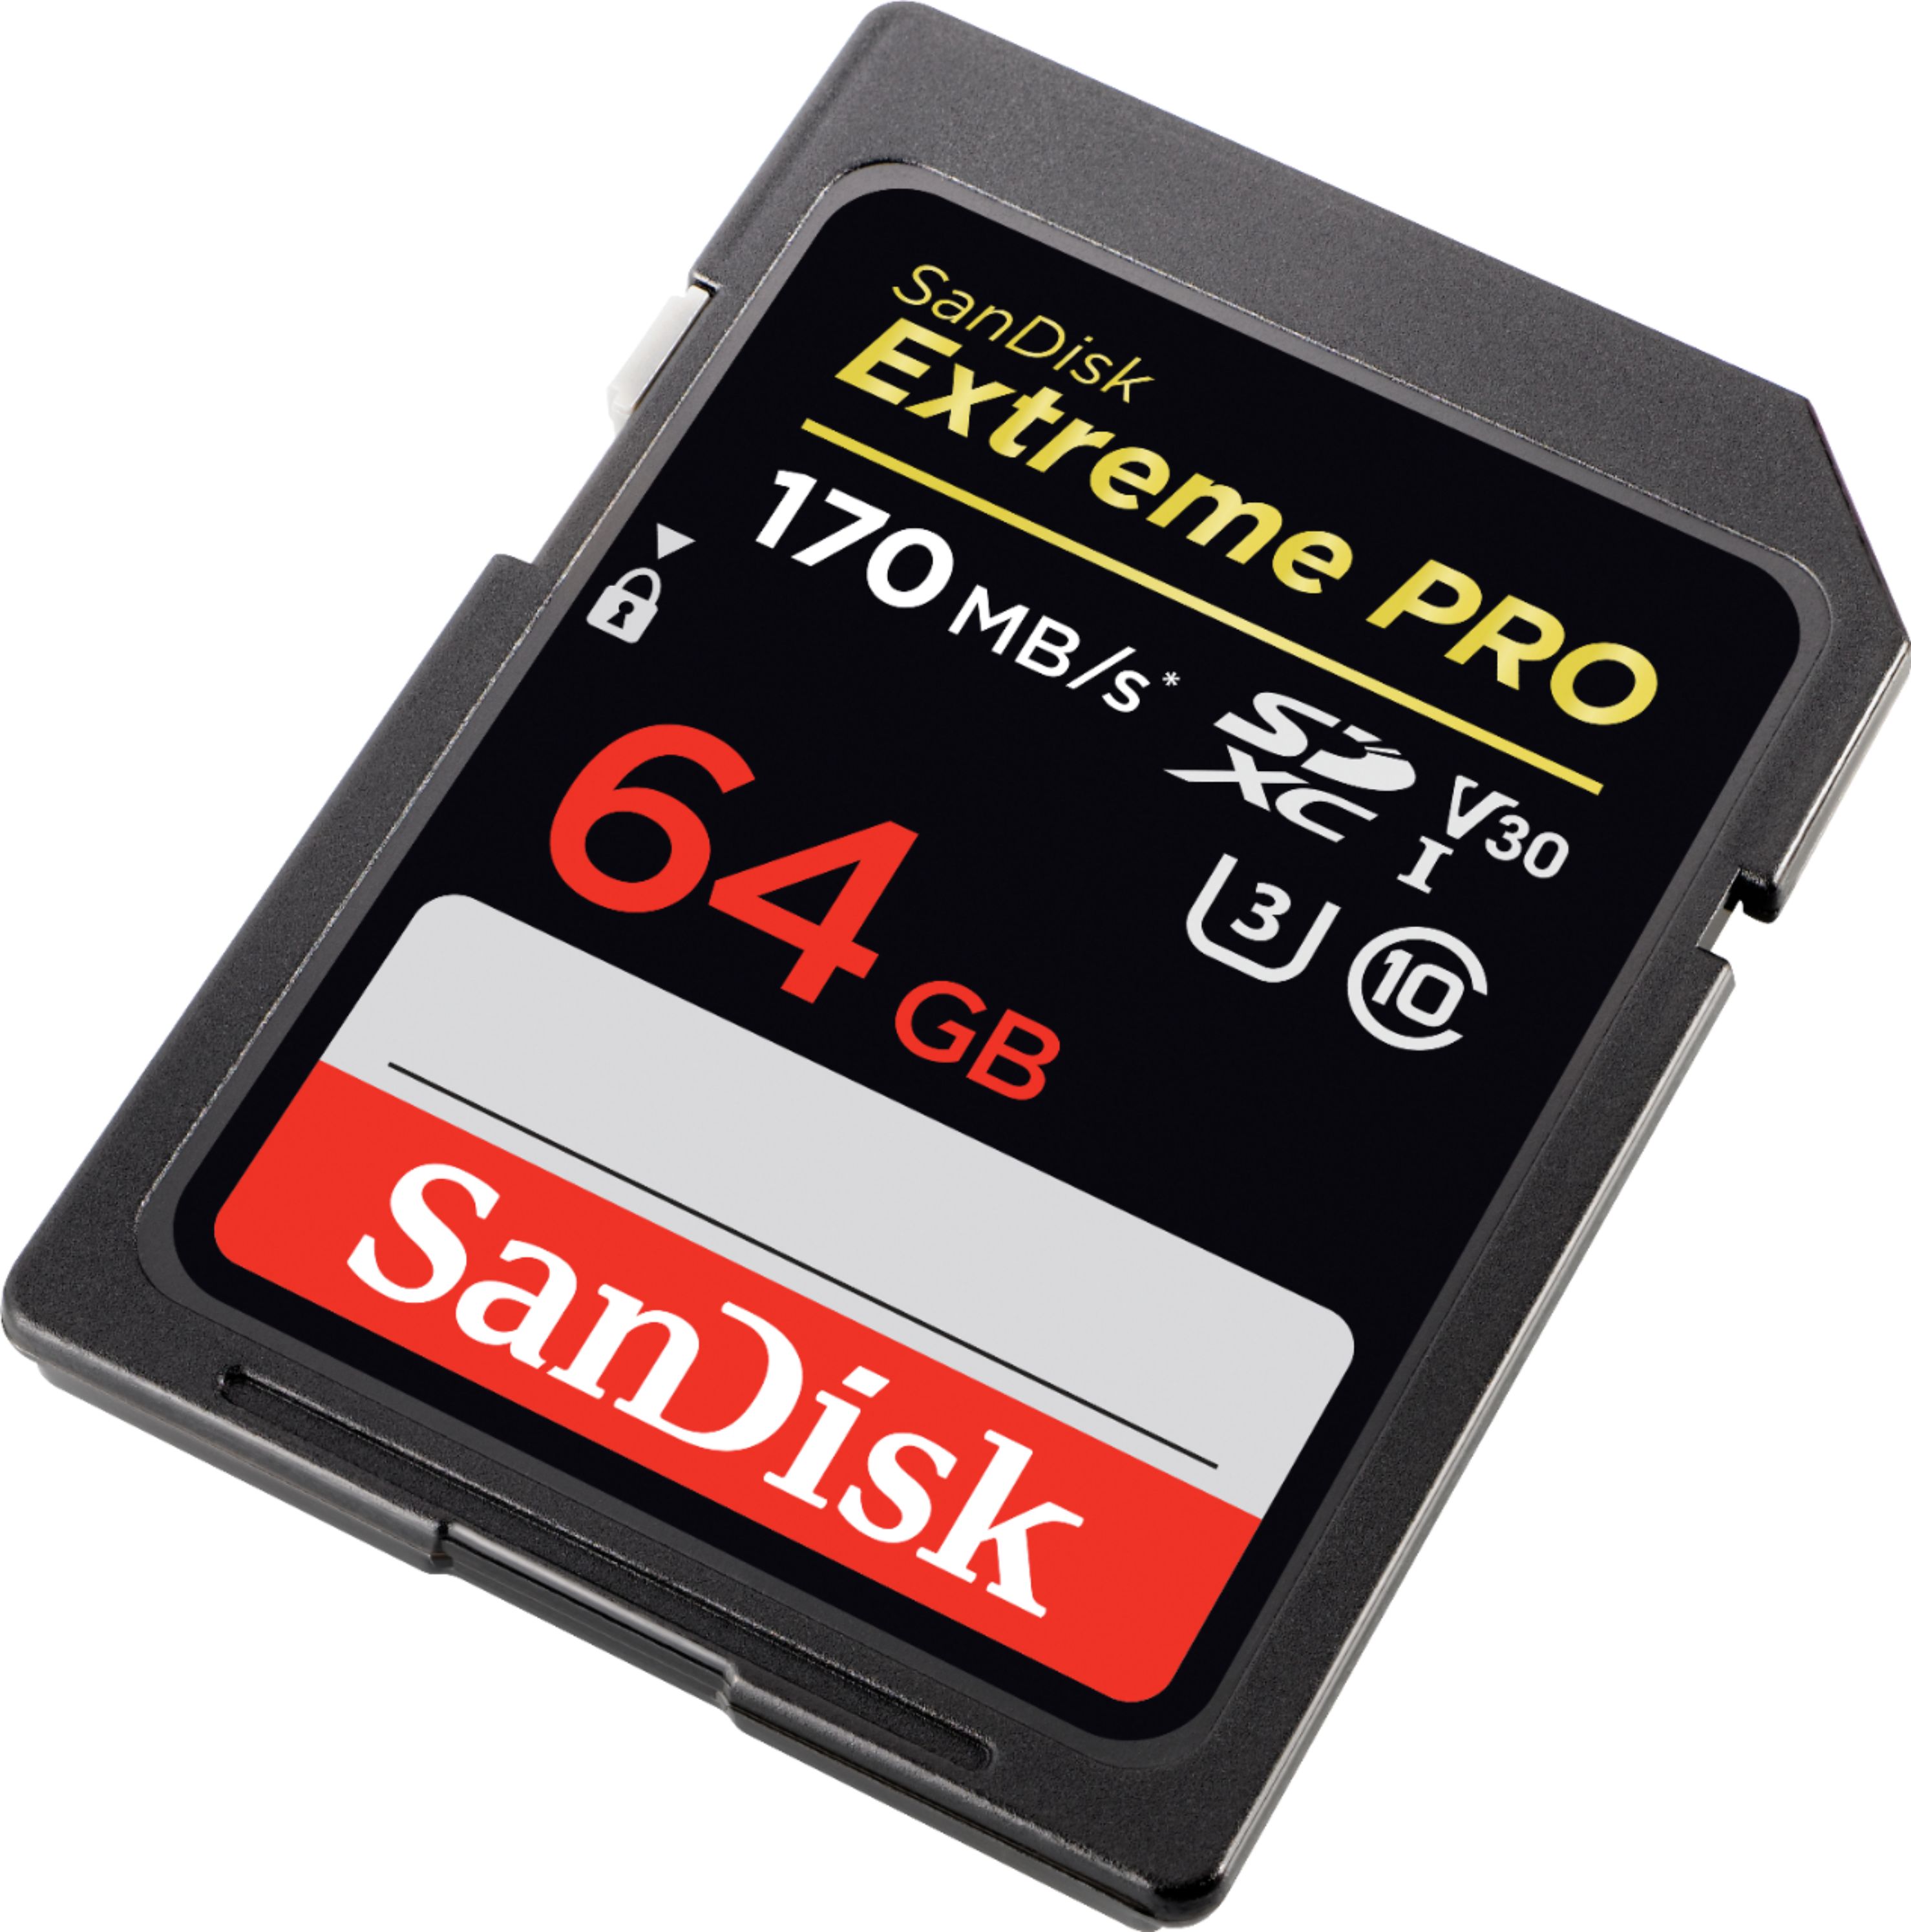 64gb sd card sandisk - Best Buy